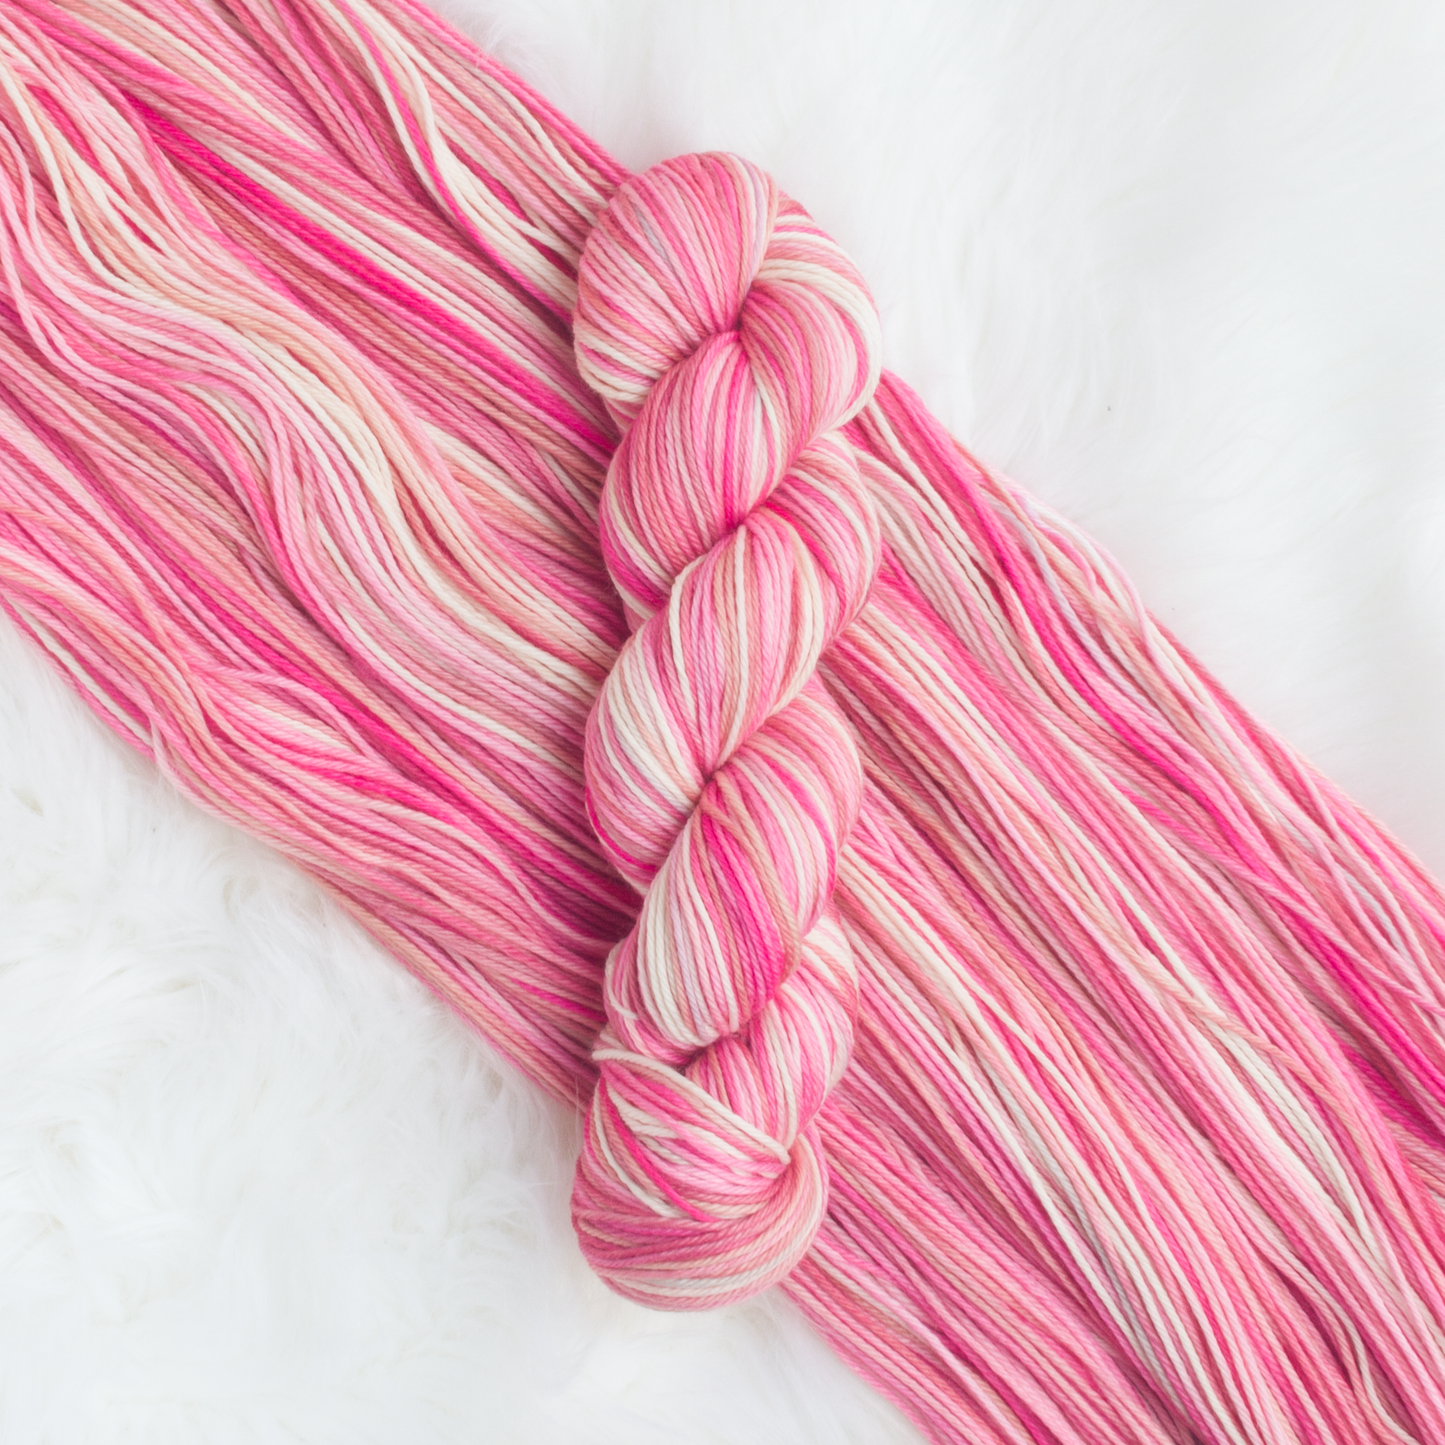 Cherry Blossom Sakura March birth month worsted yarn pink white gauge dye works knitting crochet